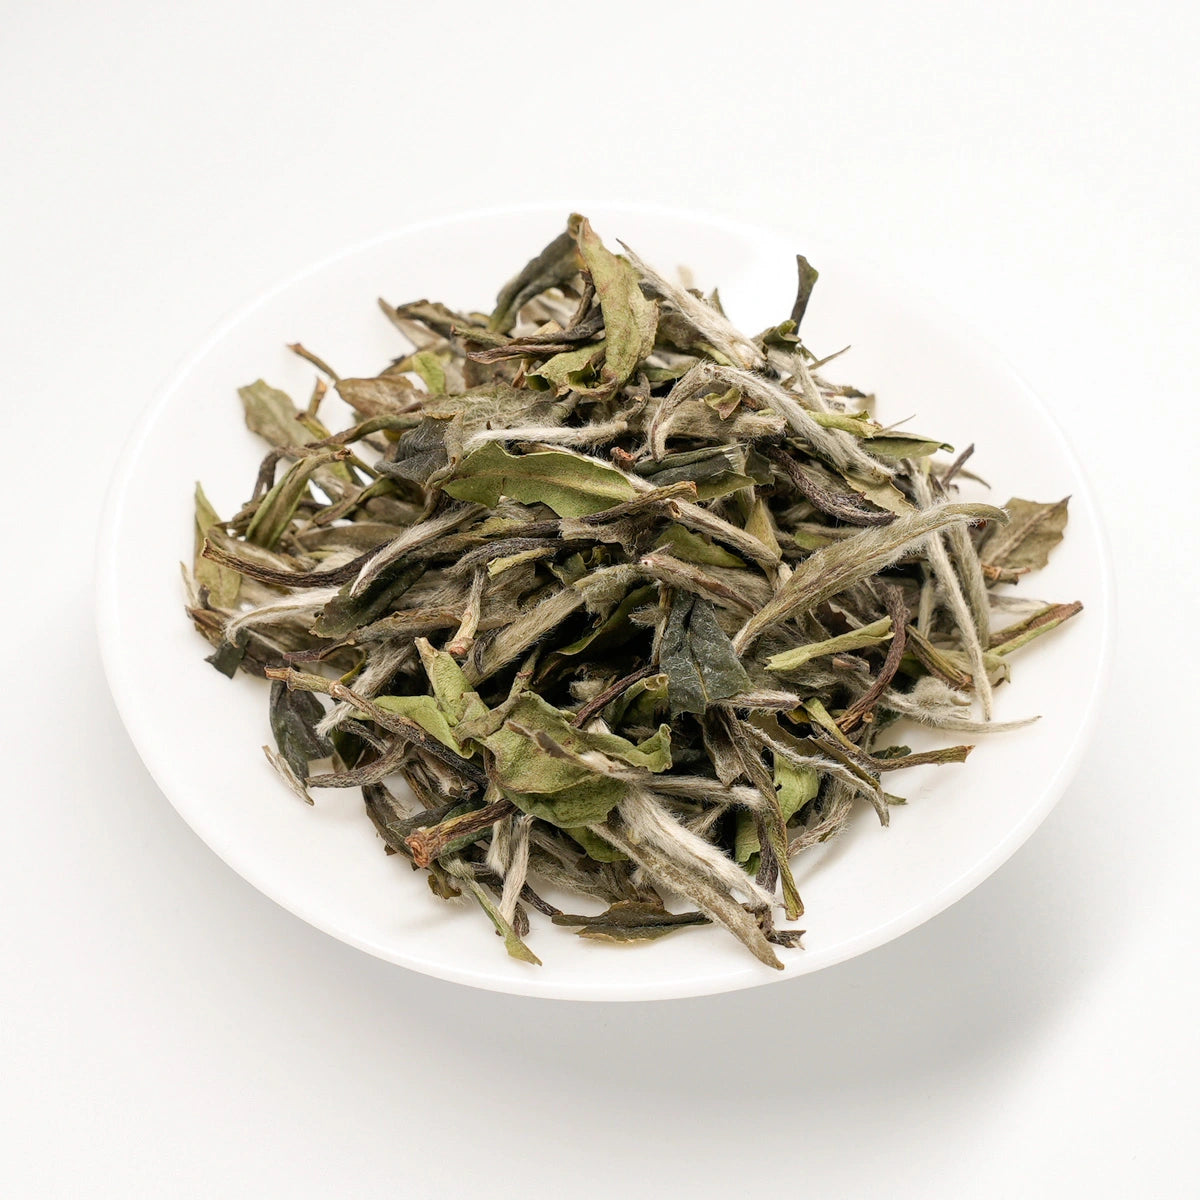 Chinese Wild White Tea